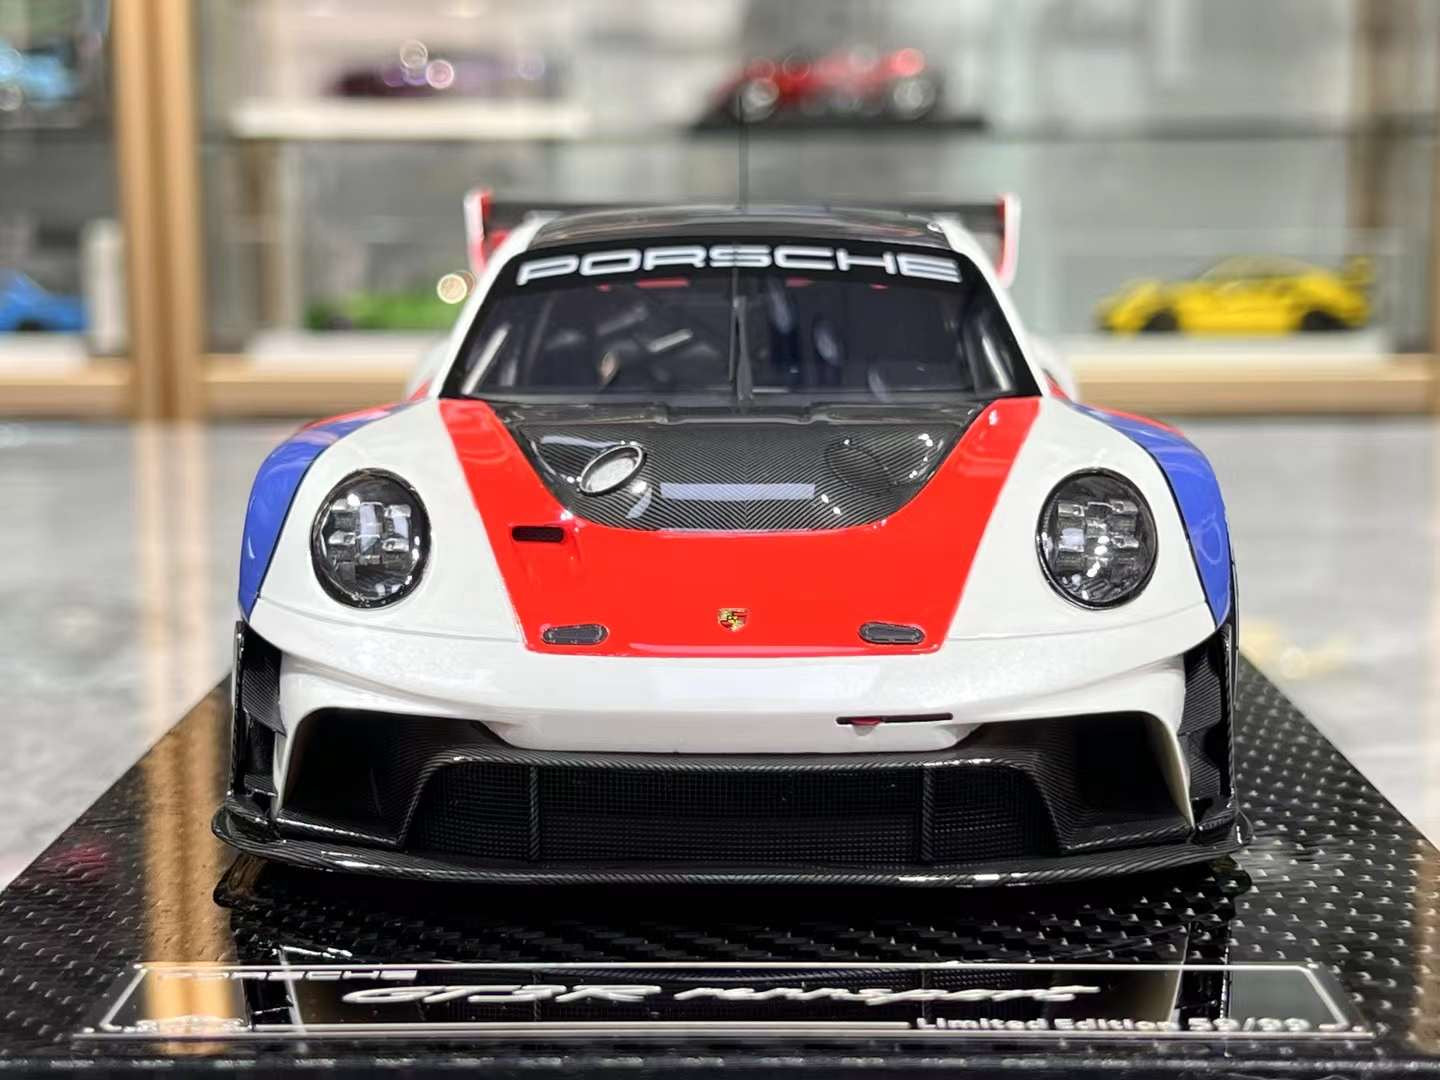 VIP Models 911 GT3R Rennsport 1/18